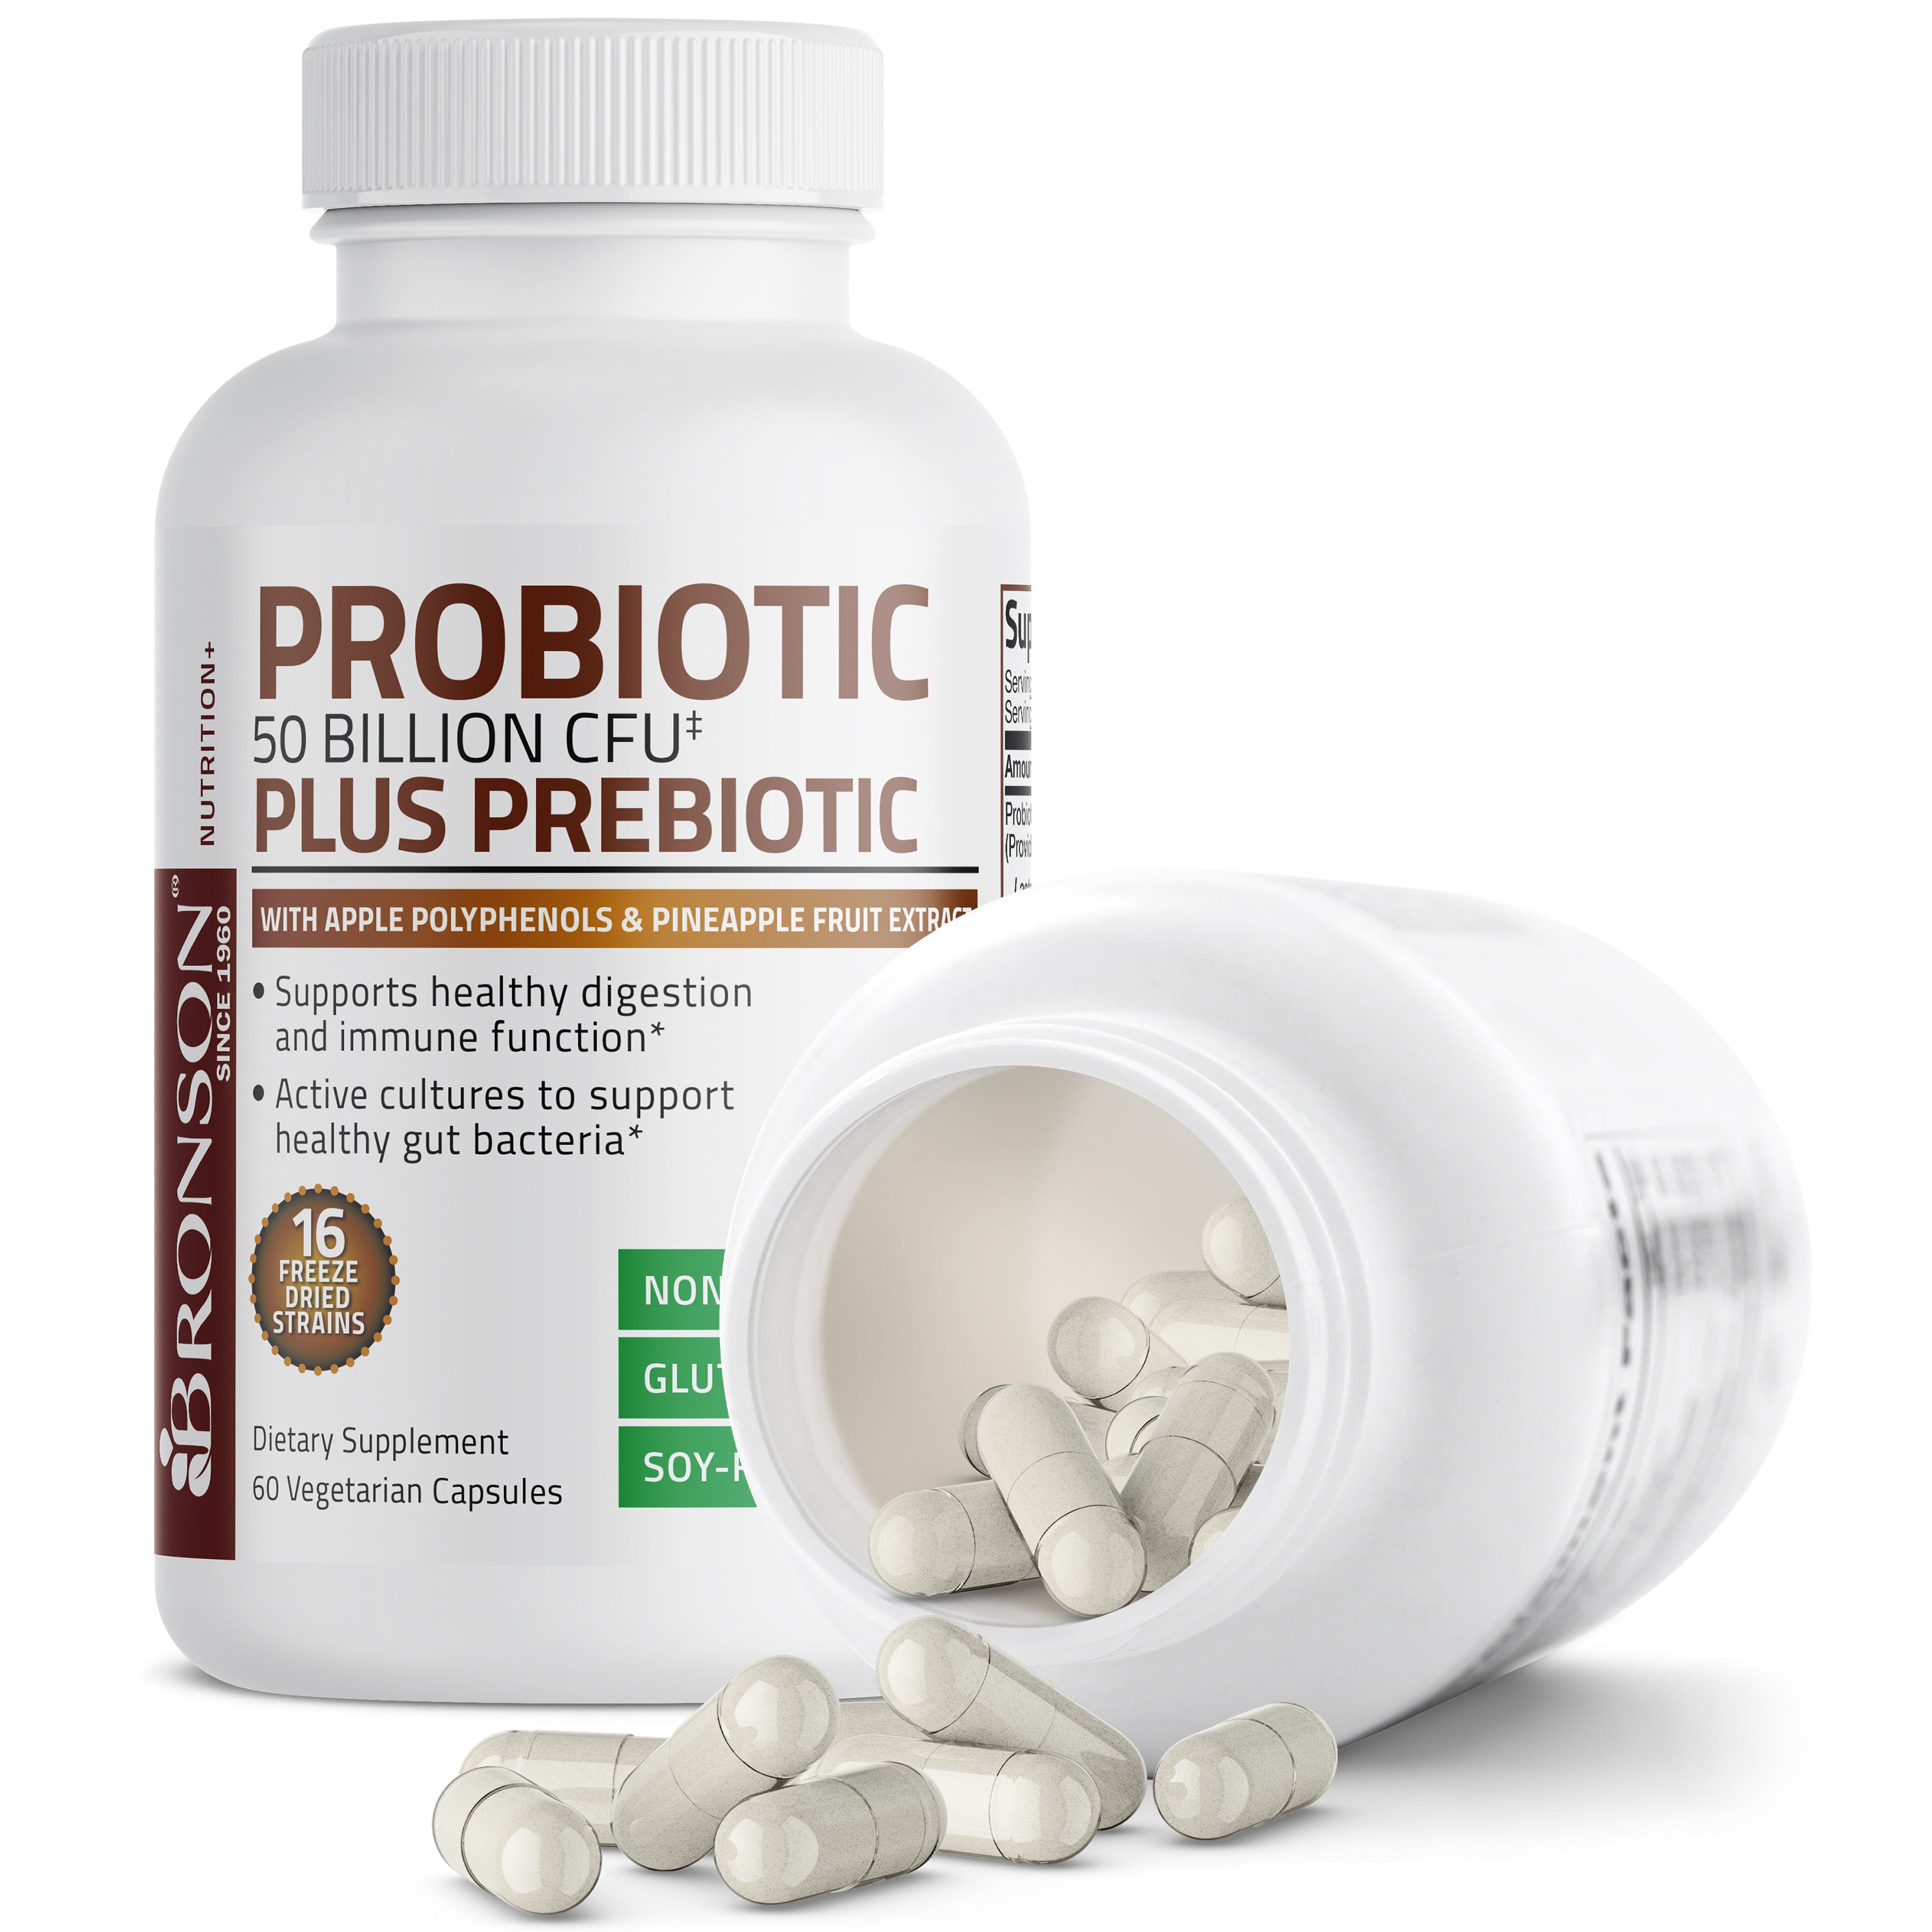 Probiotic Plus Prebiotic - 50 Billion CFU - 60 Vegetarian Capsules view 5 of 7